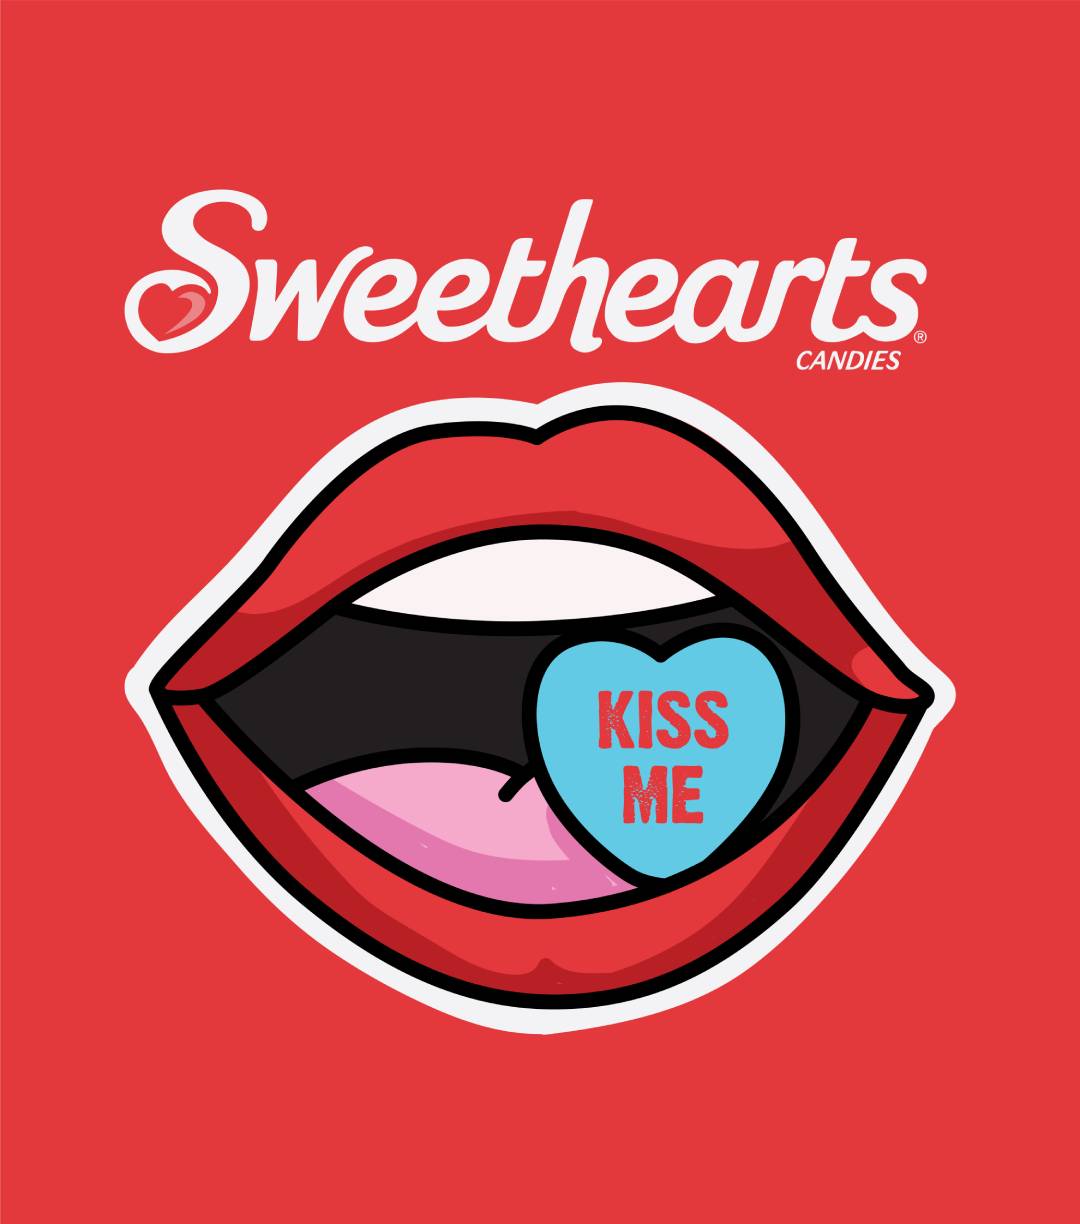 Womens Kiss Me Sweethearts Shirt